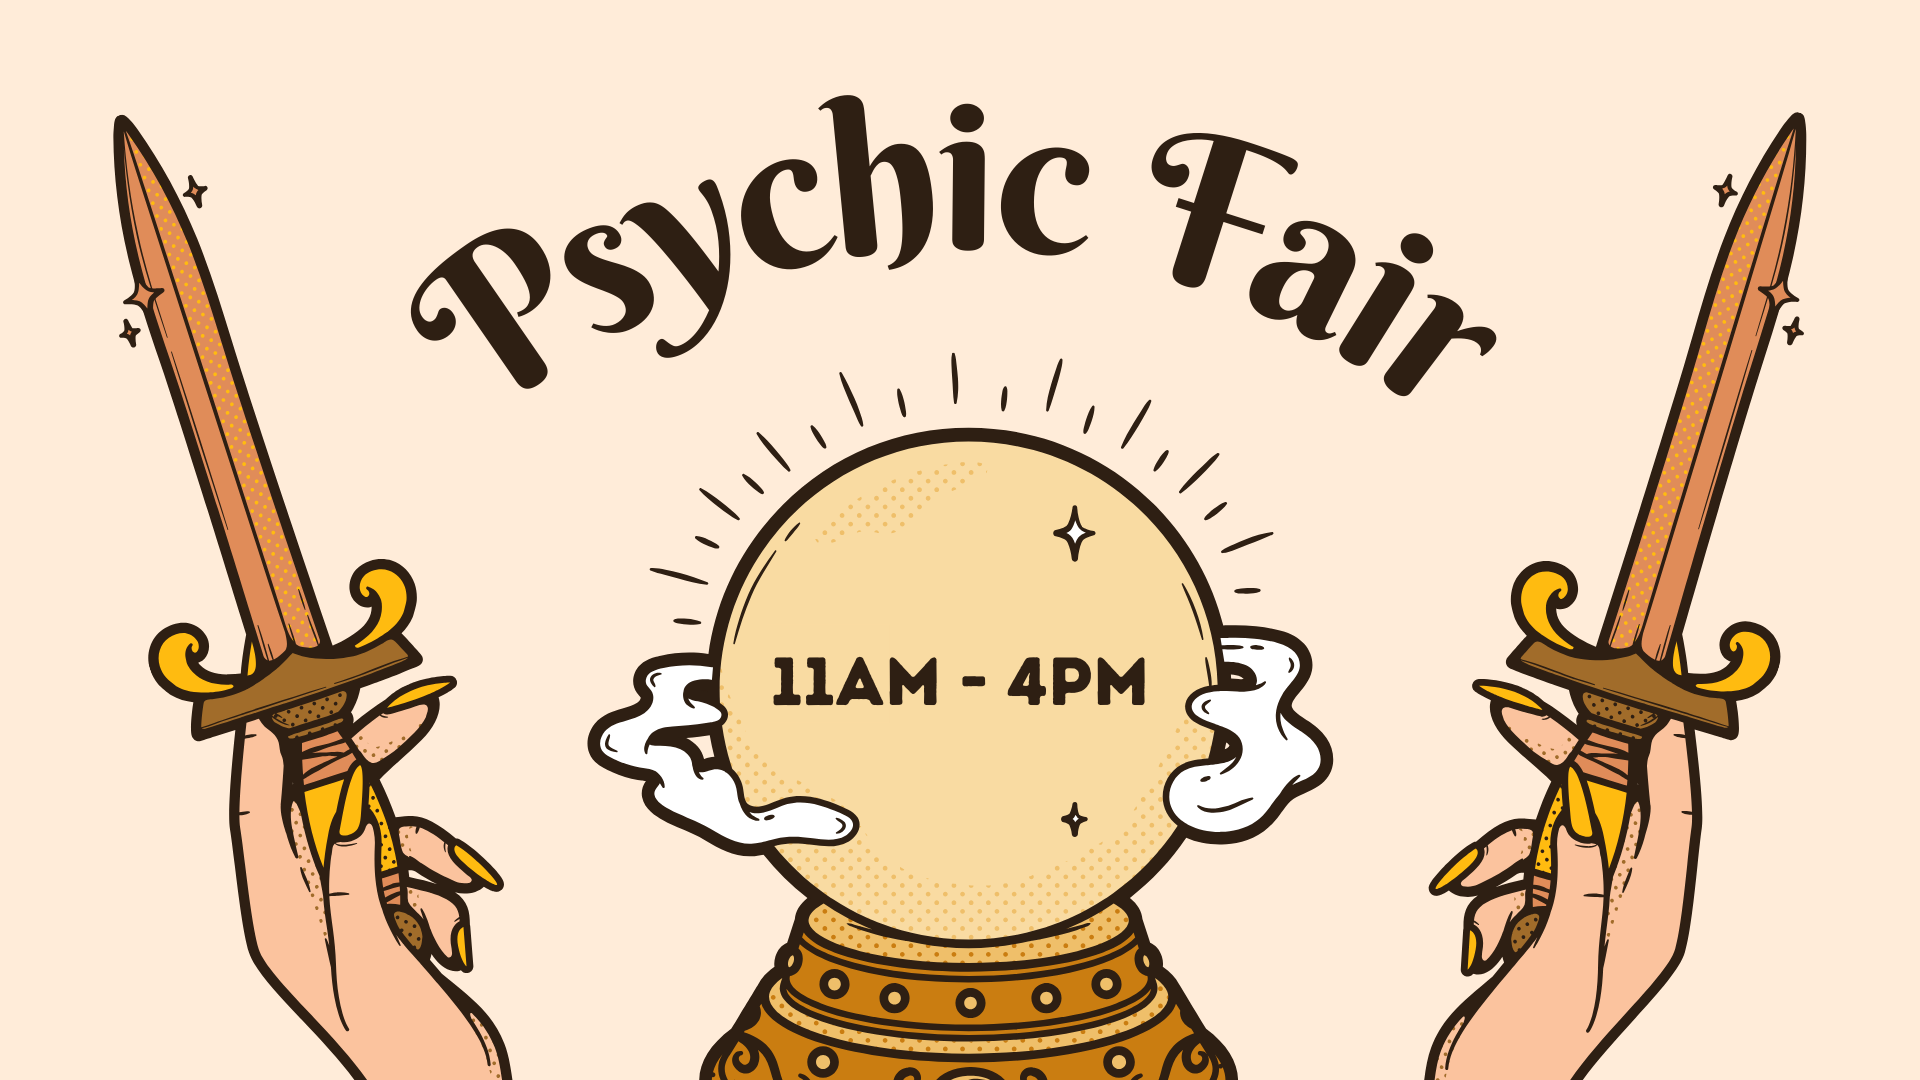 Psychic Fair